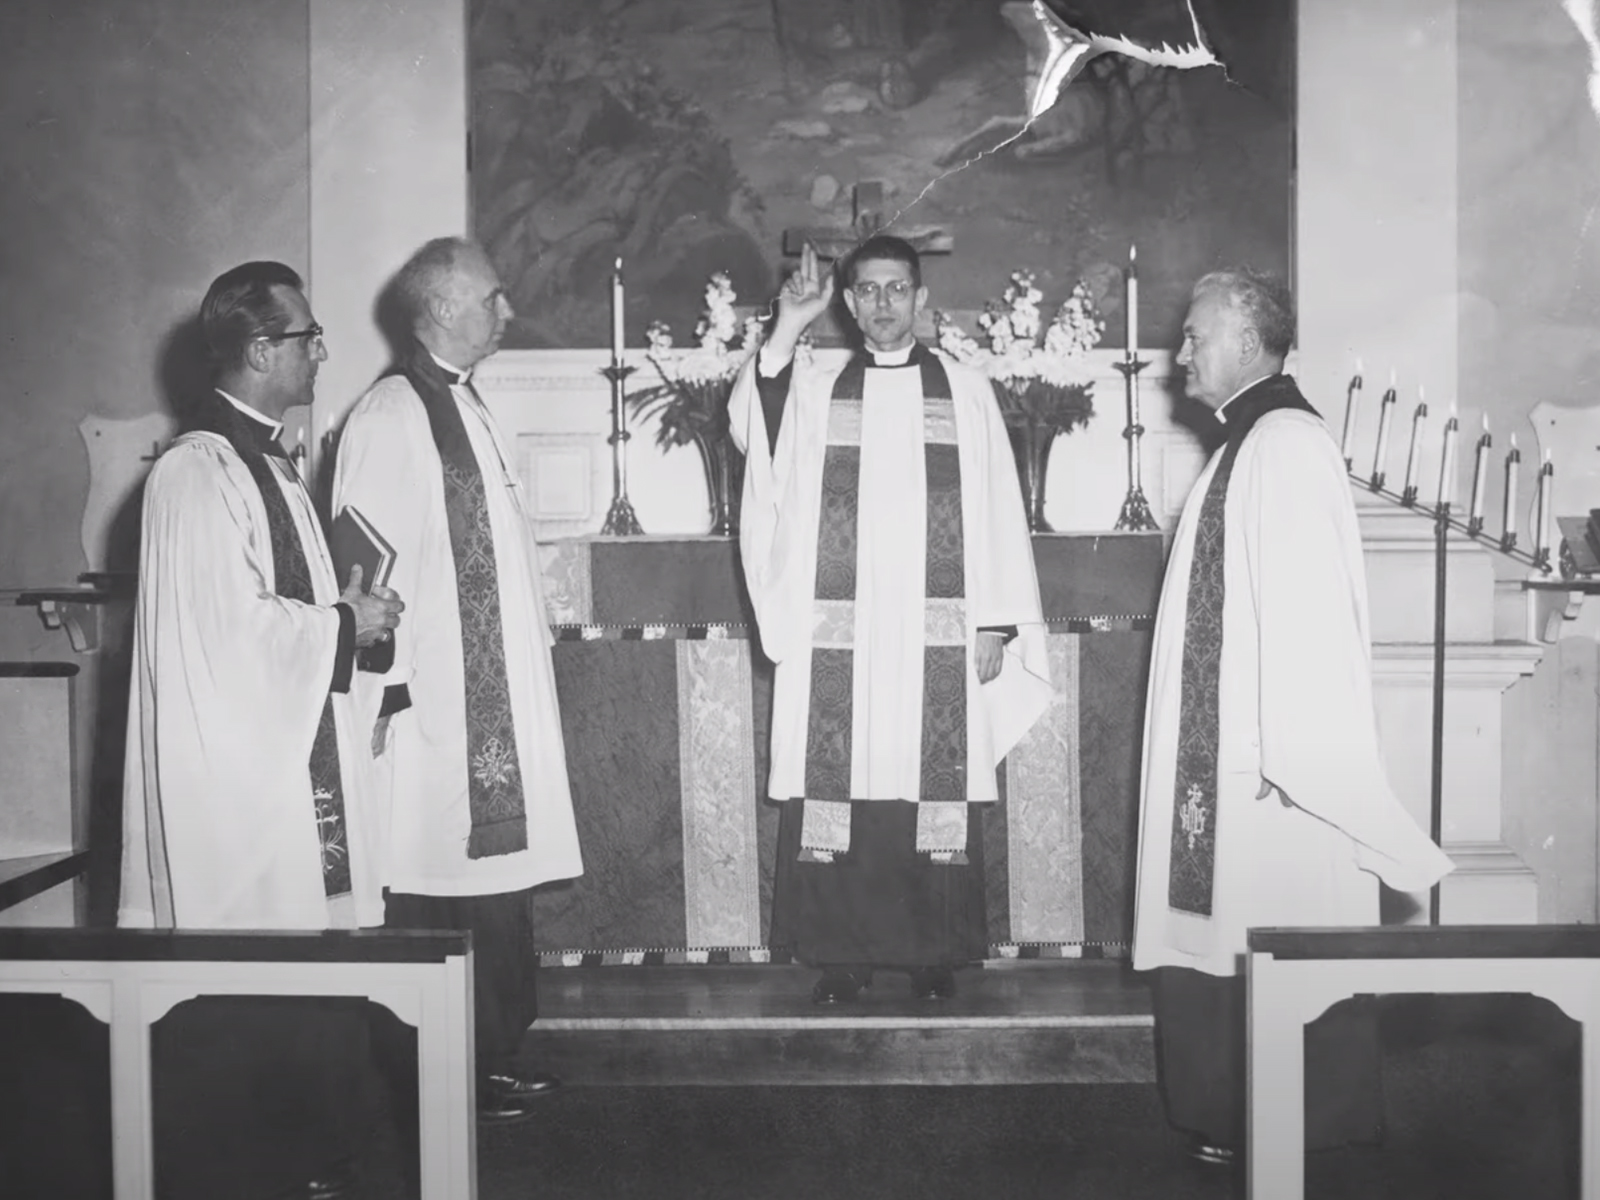 The Rev. Art Simon, center, at Trinity Lutheran Church in New York, circa 1960s. (Photo courtesy Bread for the World)